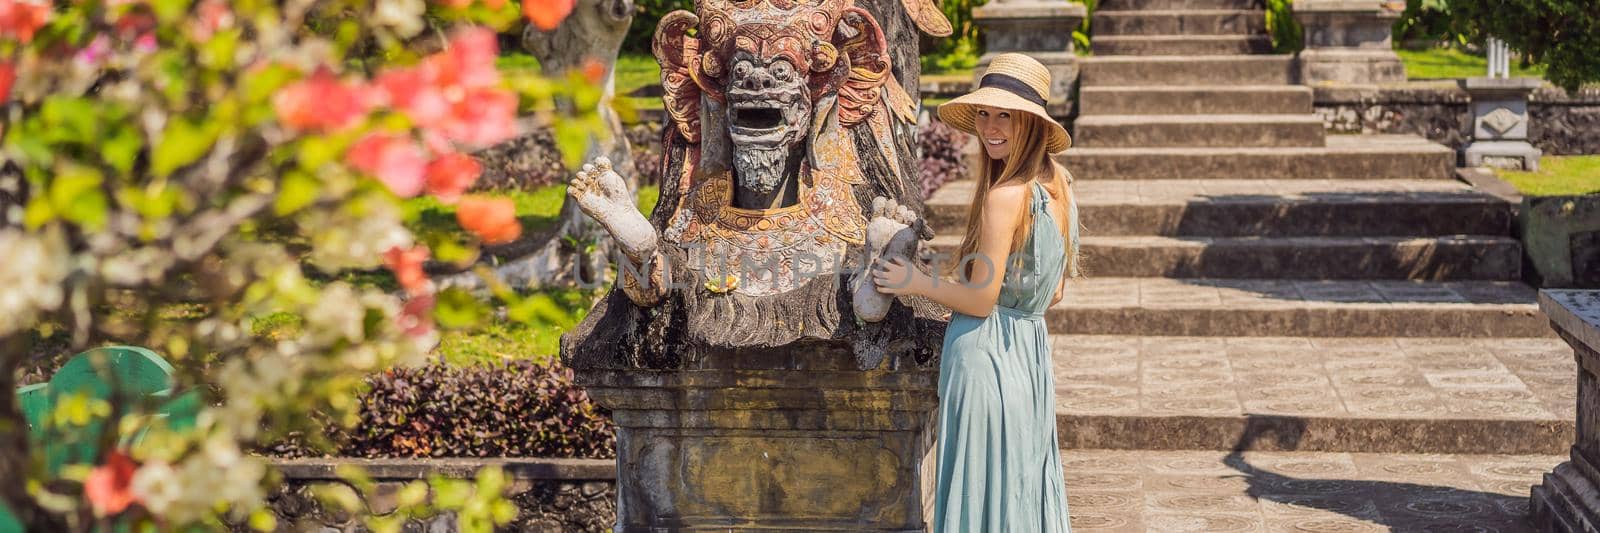 Young woman tourist in Taman Tirtagangga, Water palace, Water park, Bali Indonesia BANNER, LONG FORMAT by galitskaya